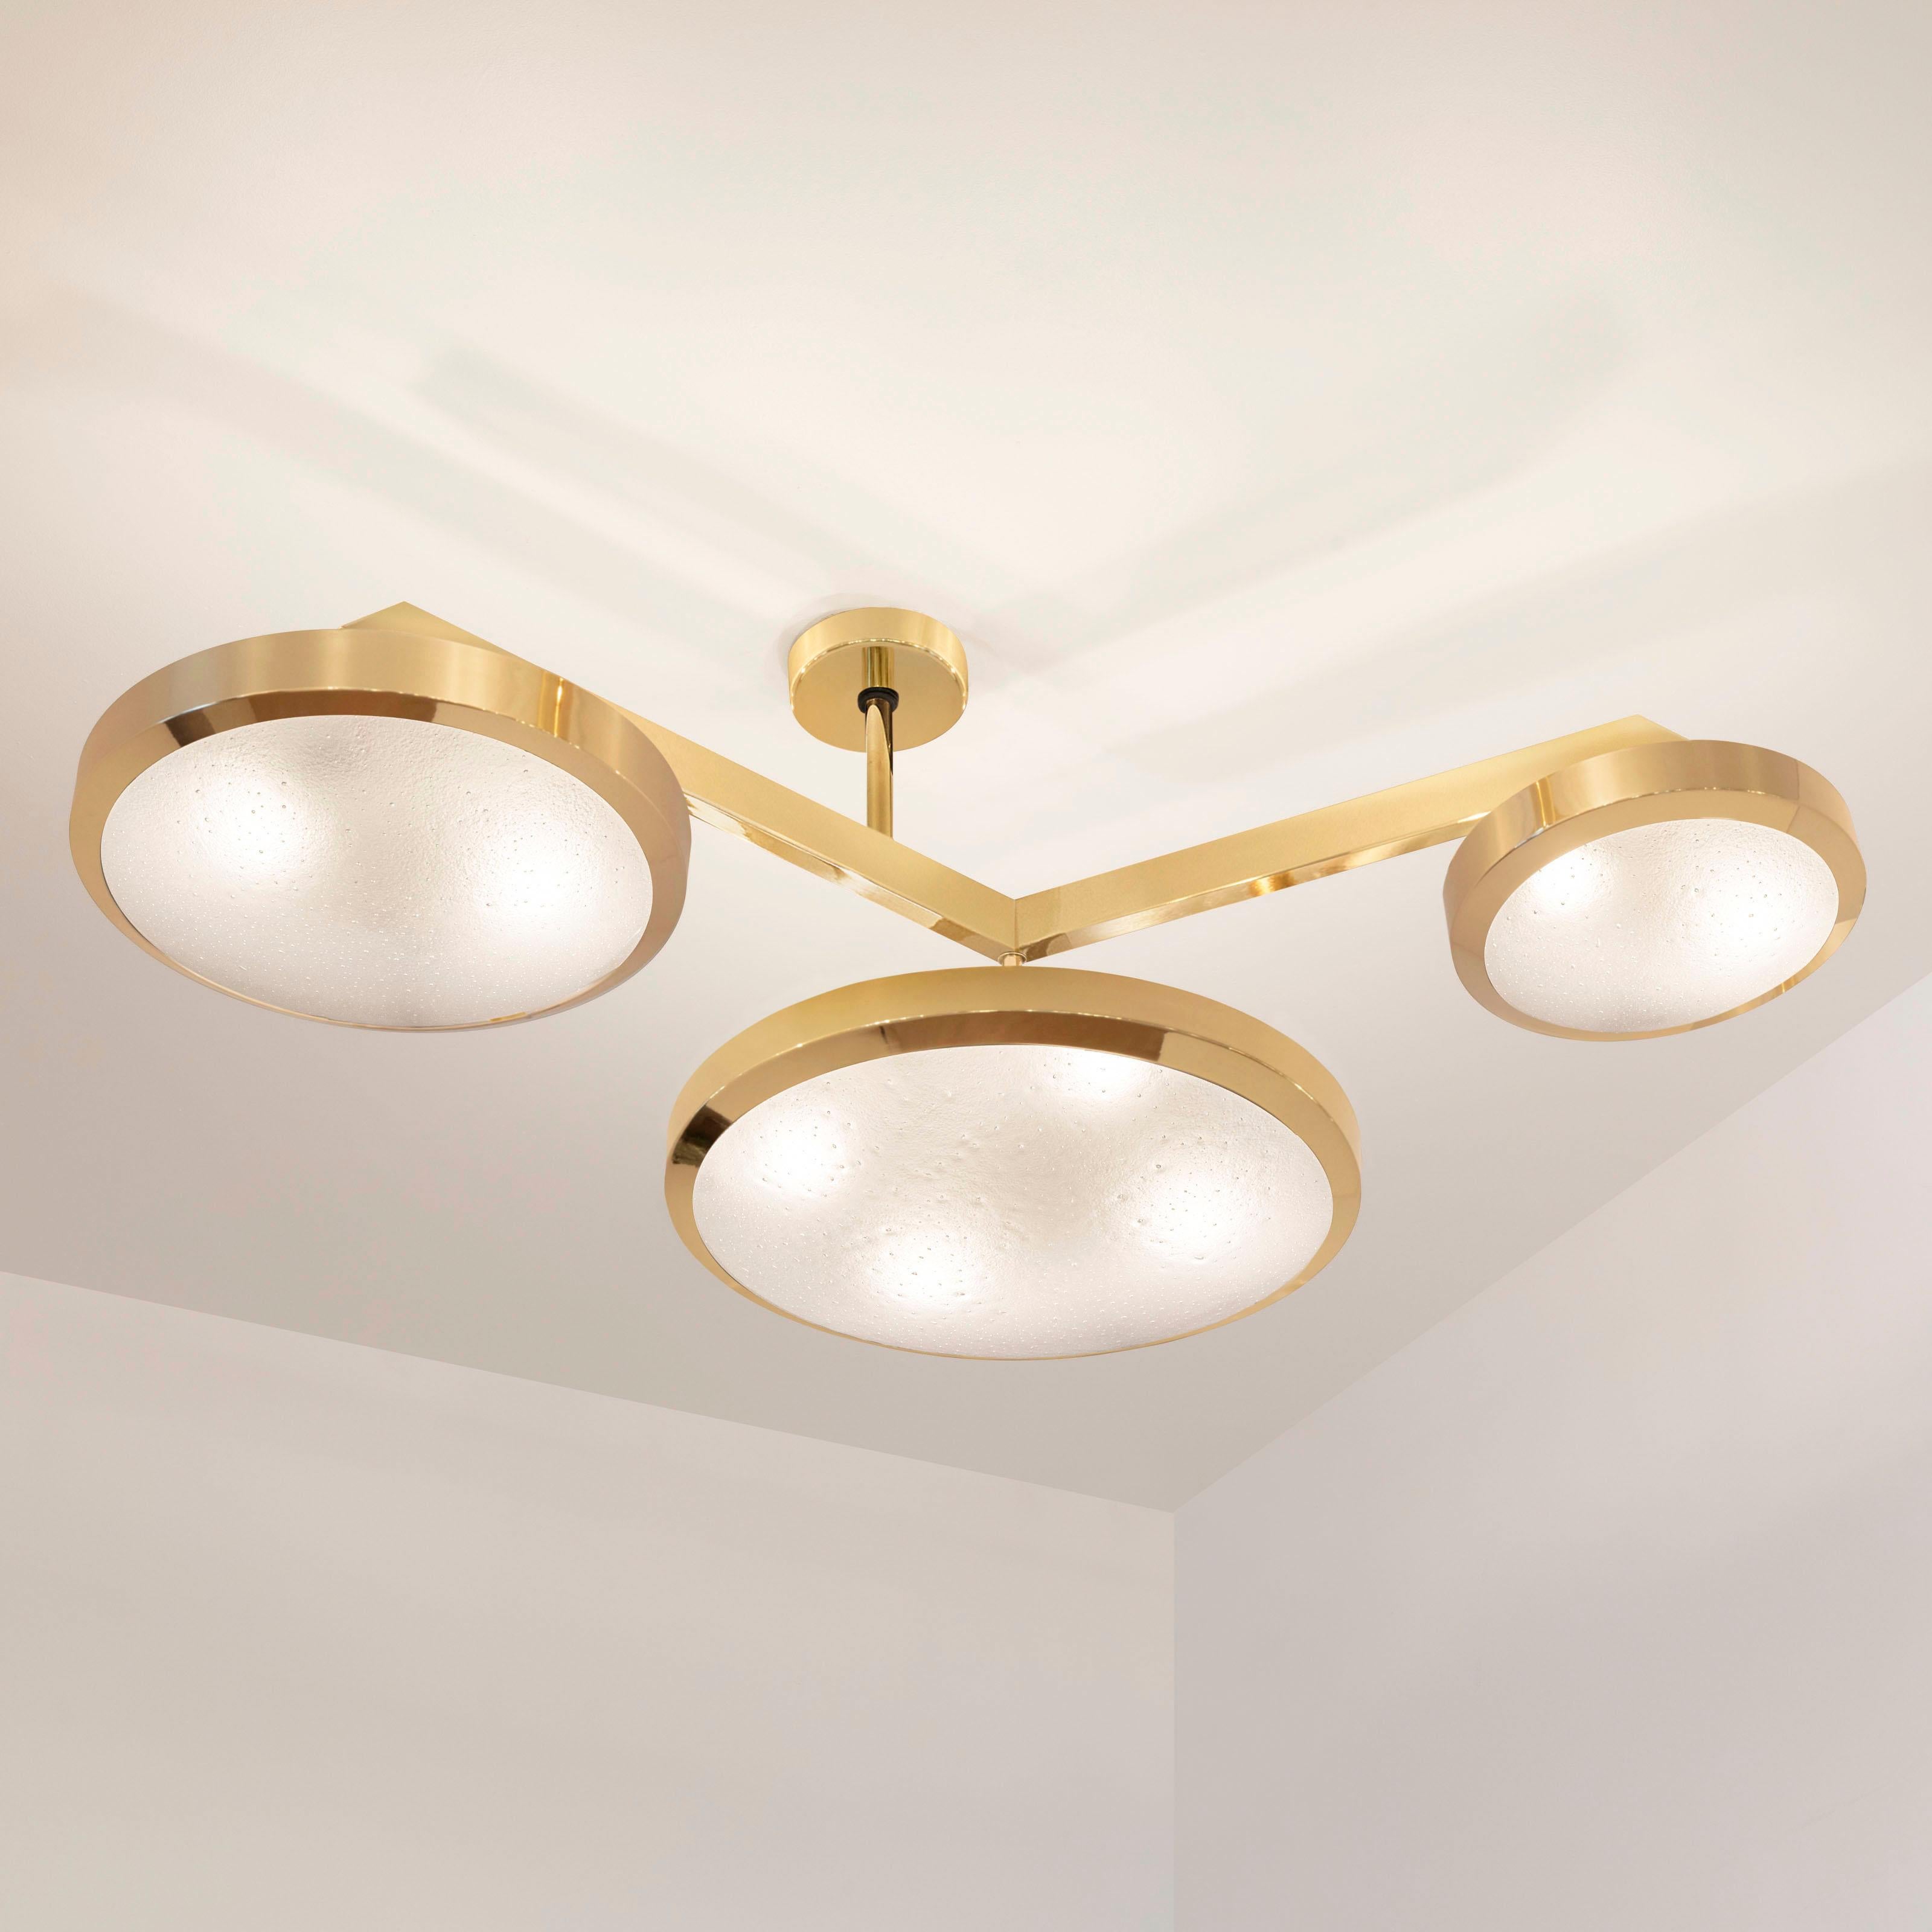 Italian Zeta Ceiling Light by Gaspare Asaro-Satin Brass Finish For Sale